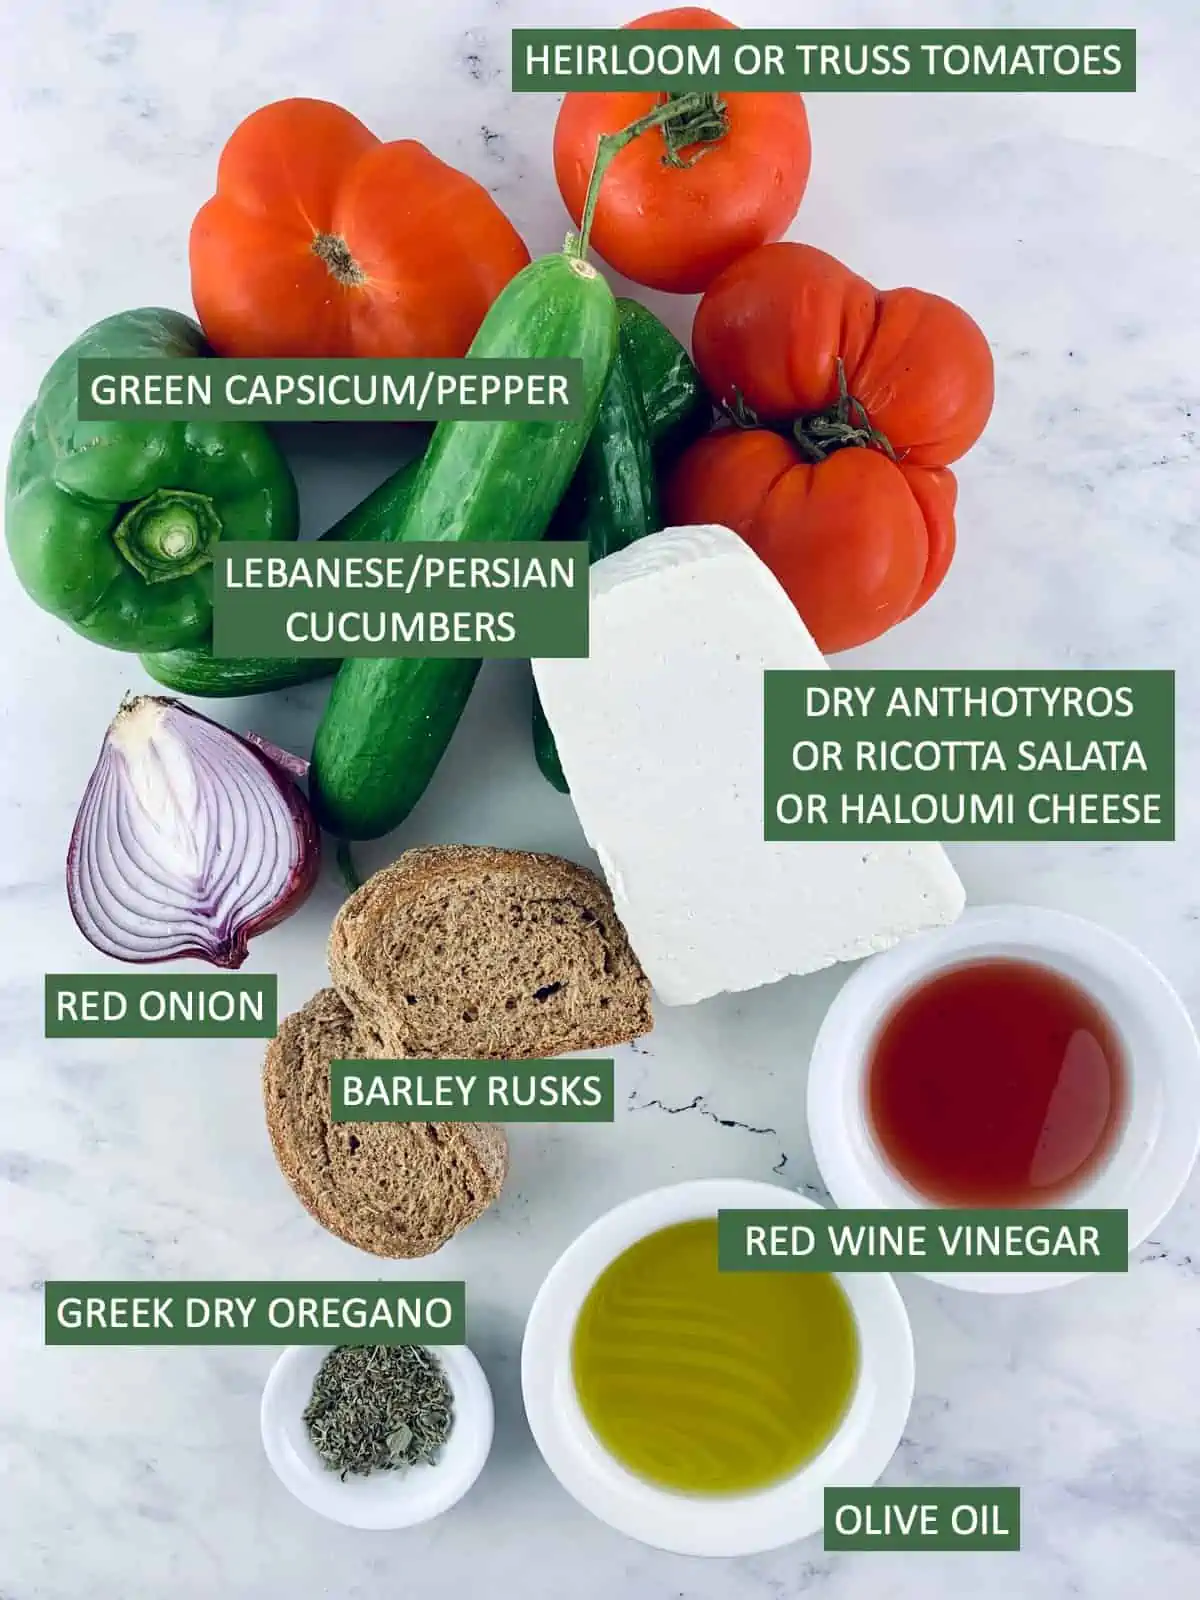 Labelled ingredients needed to make Cretan salad.